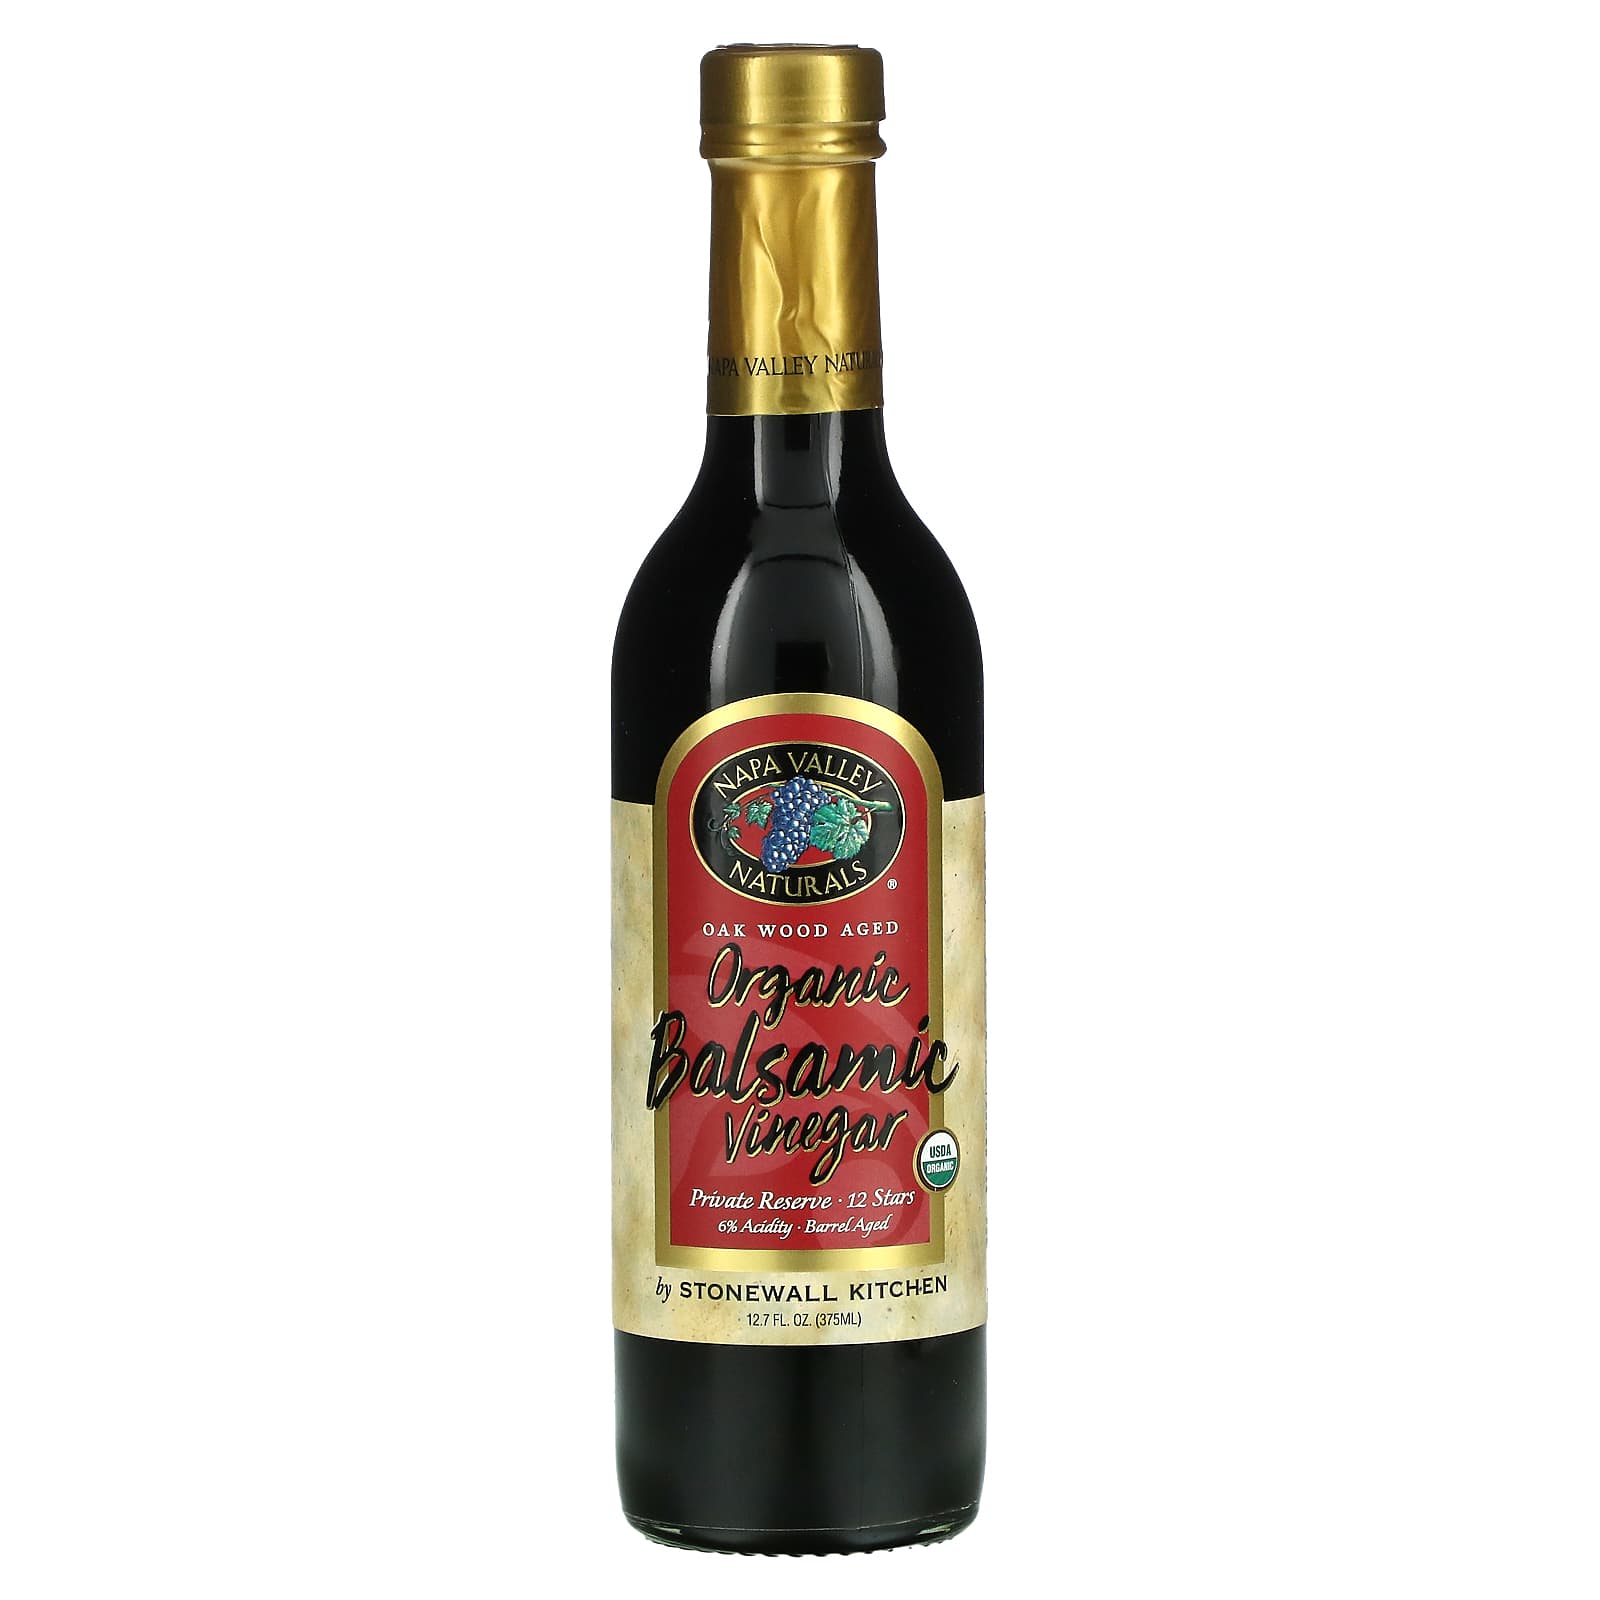 Napa Valley Naturals Organic Balsamic Vinegar 12 7 Fl Oz 375 Ml